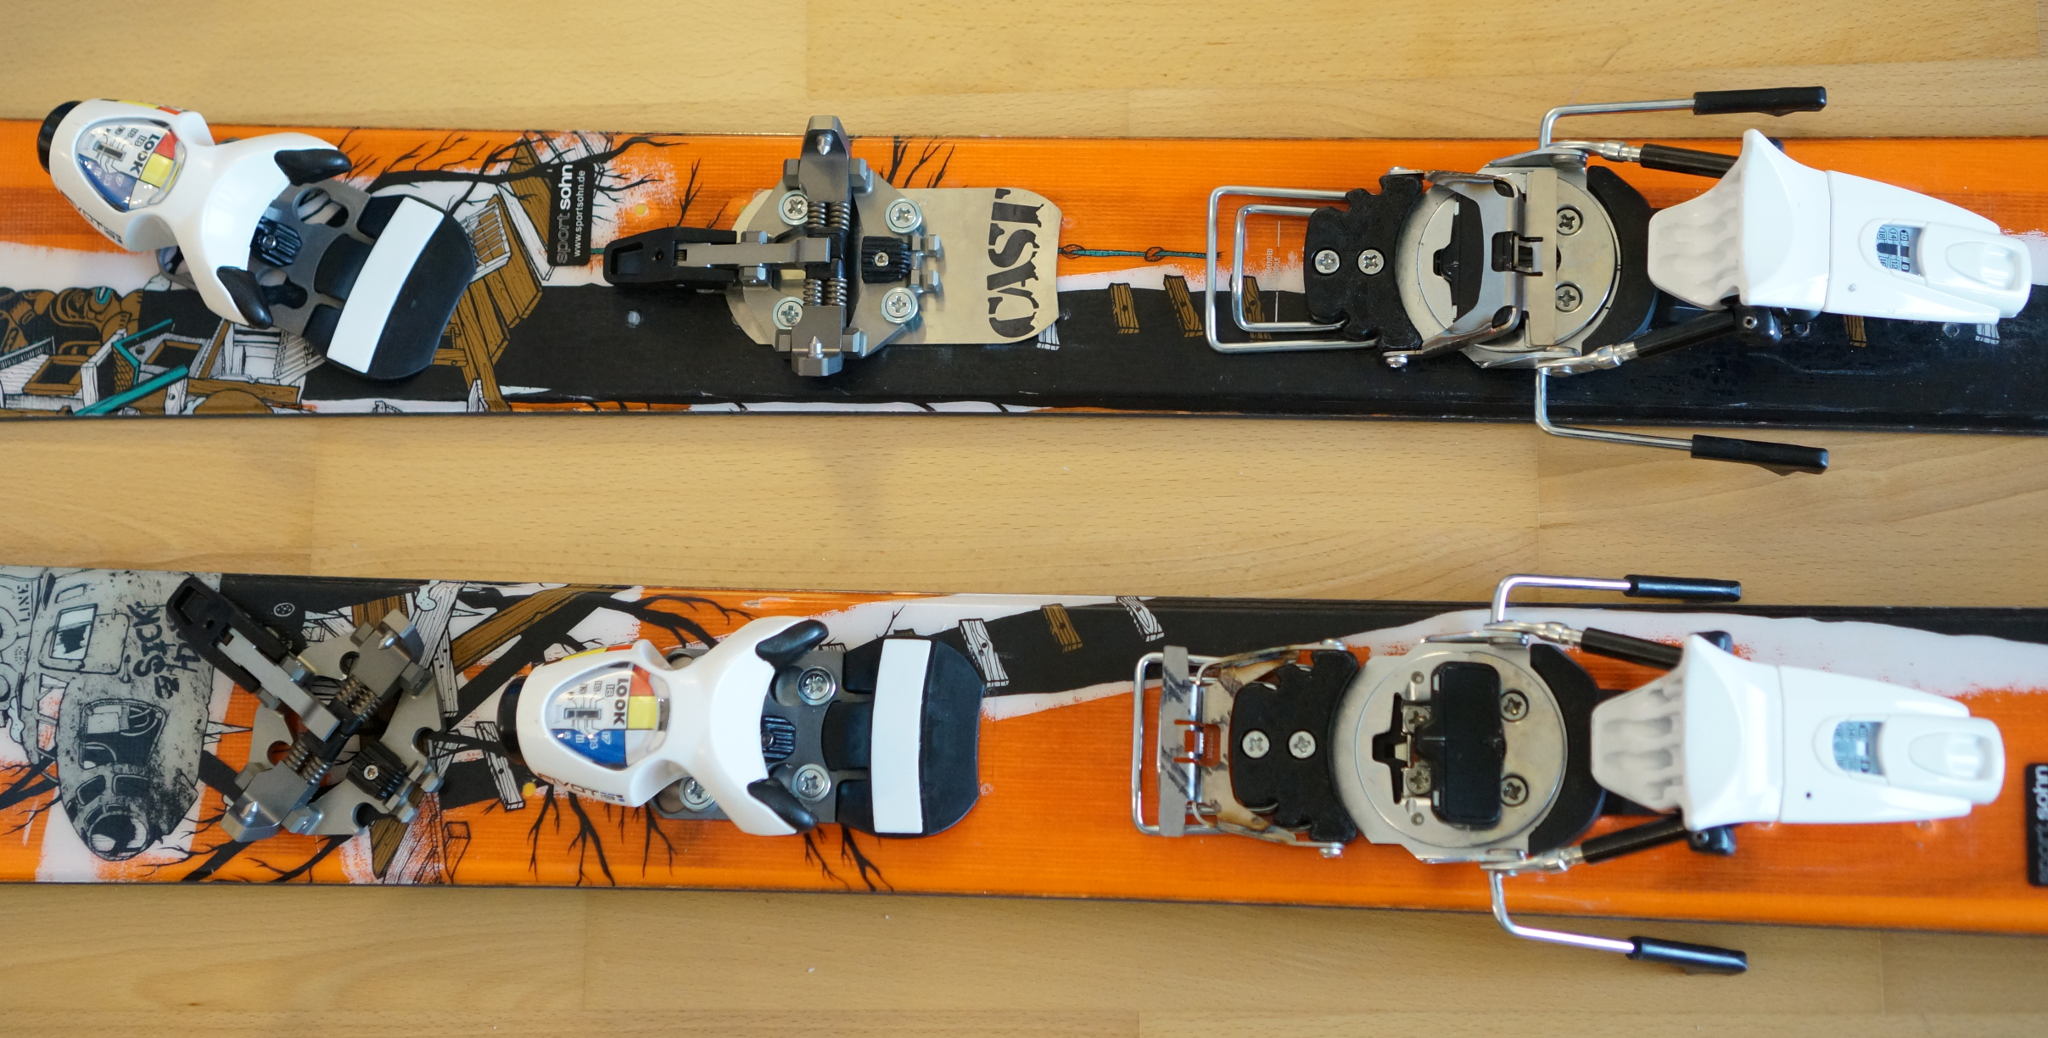 CAST Freetour mounted to skis